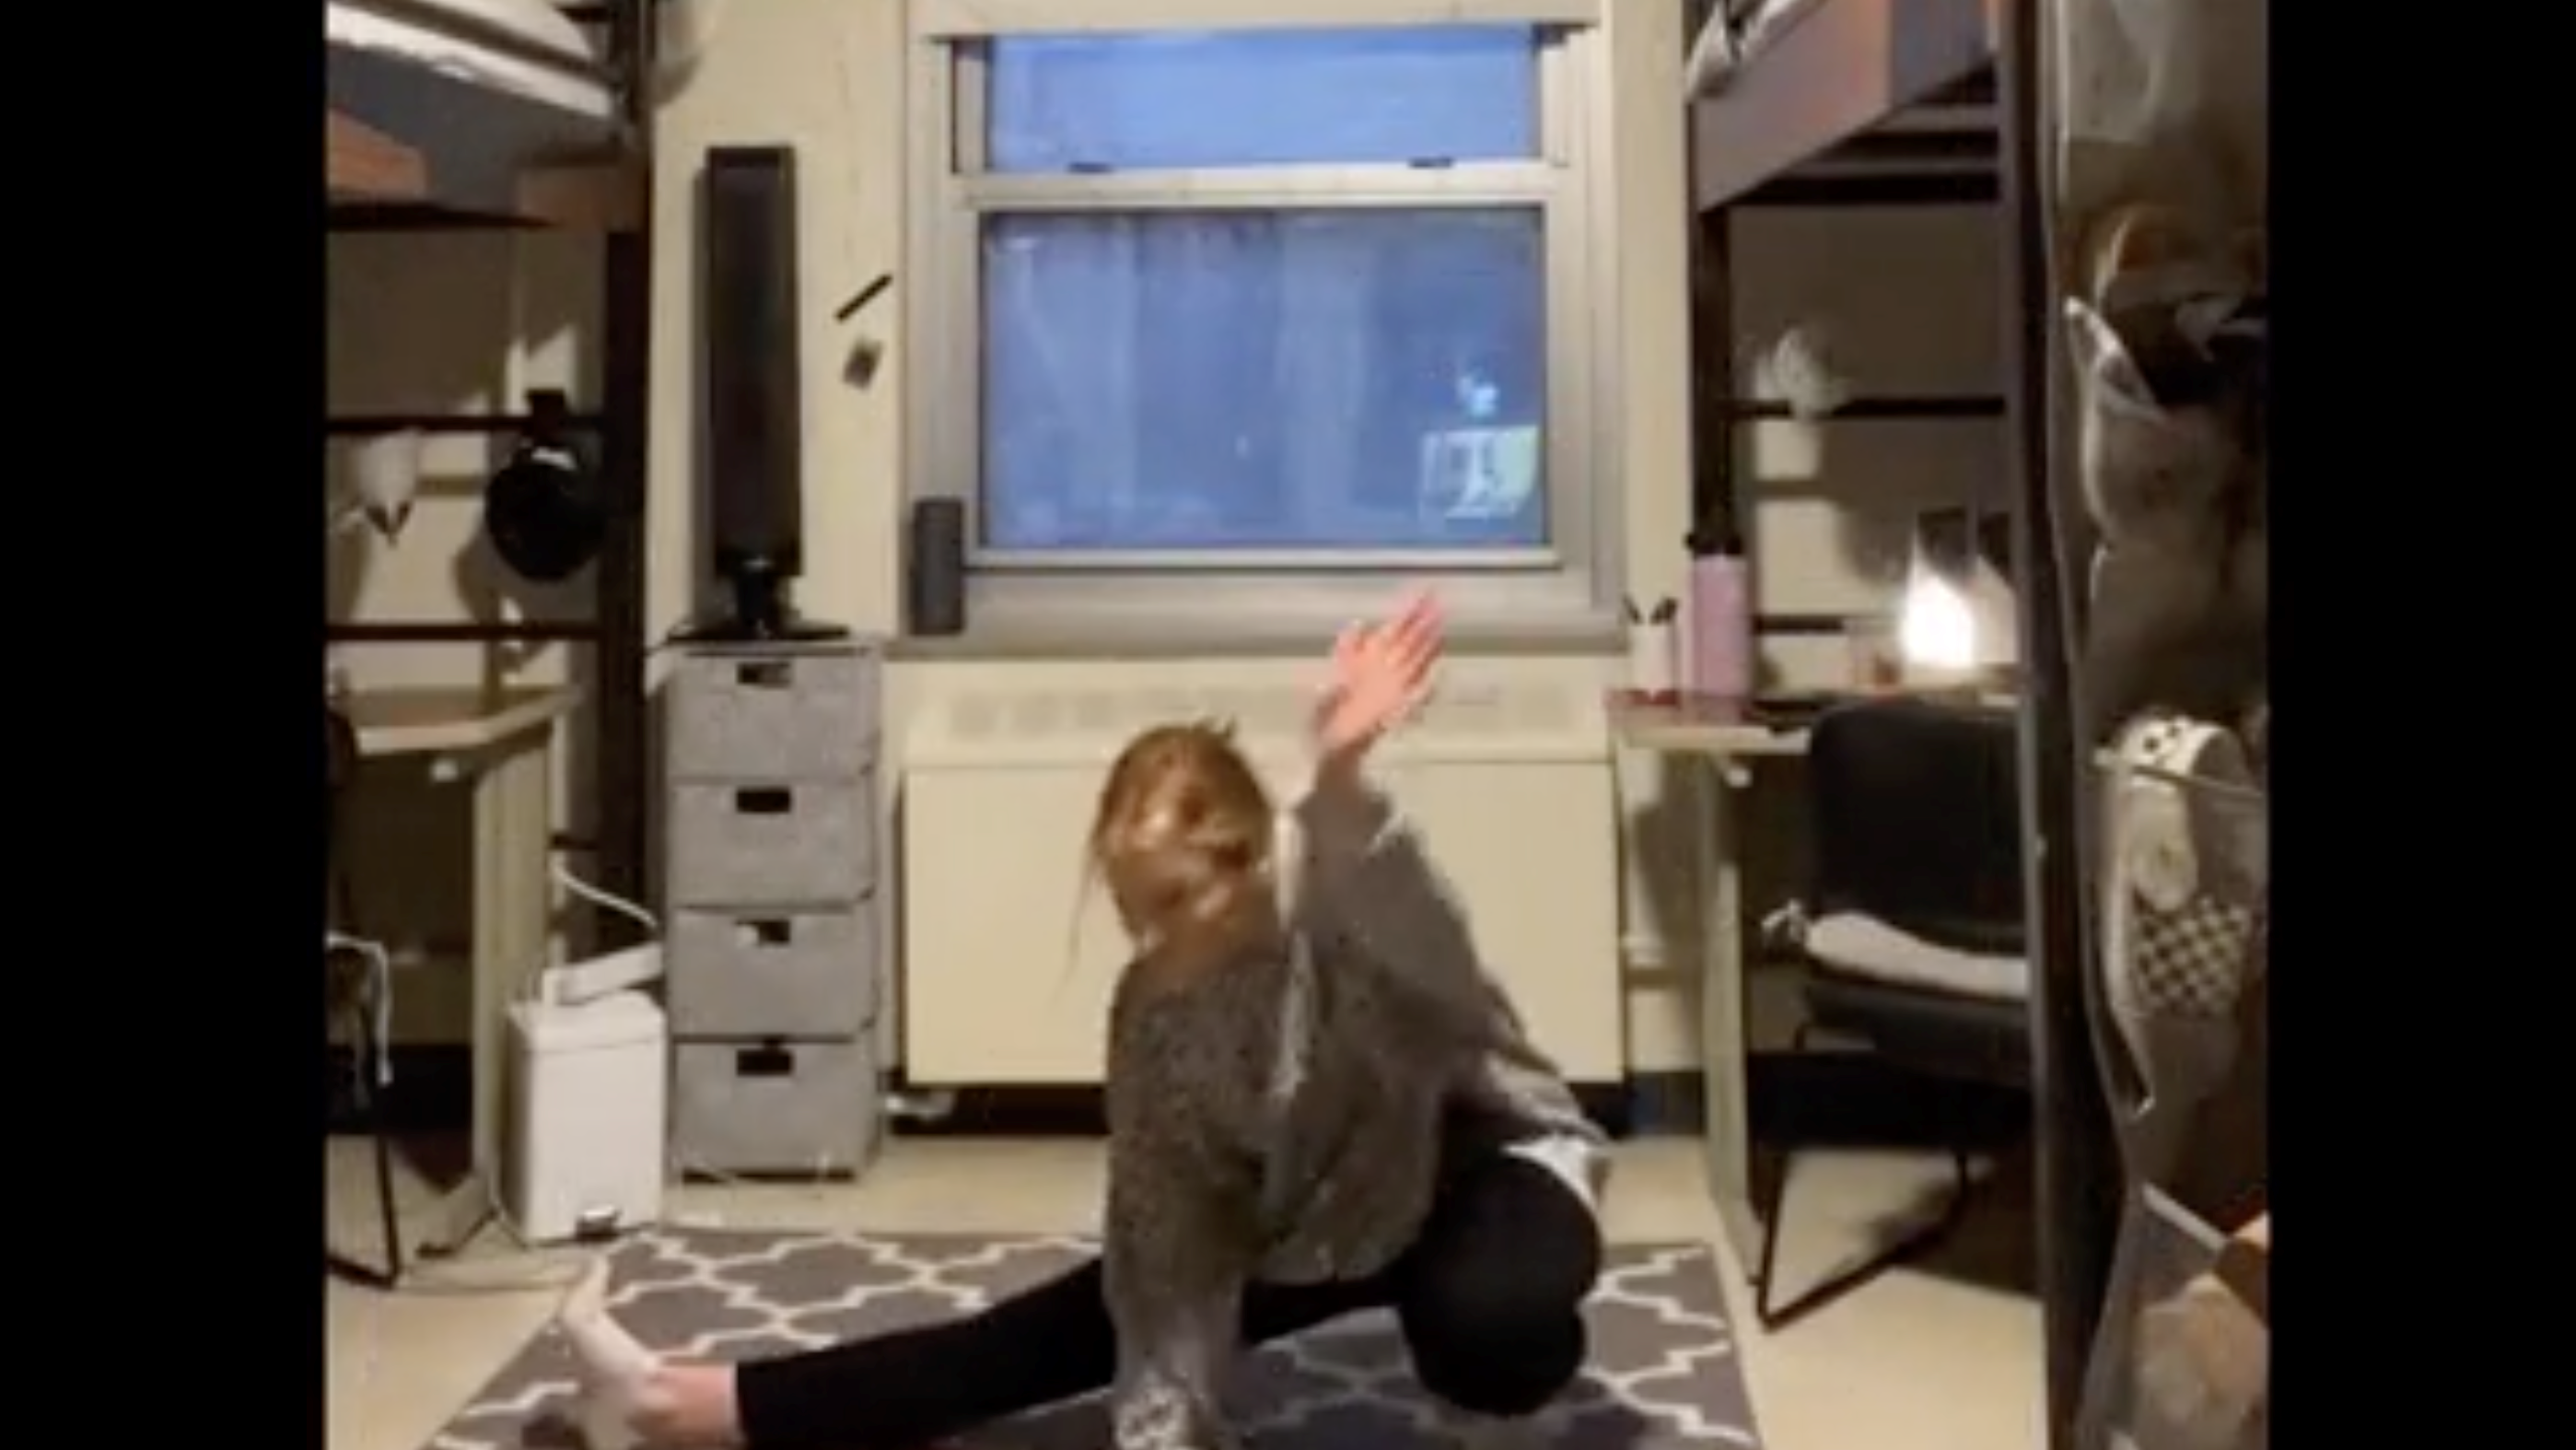 A dancer on the floor of a dorm room.